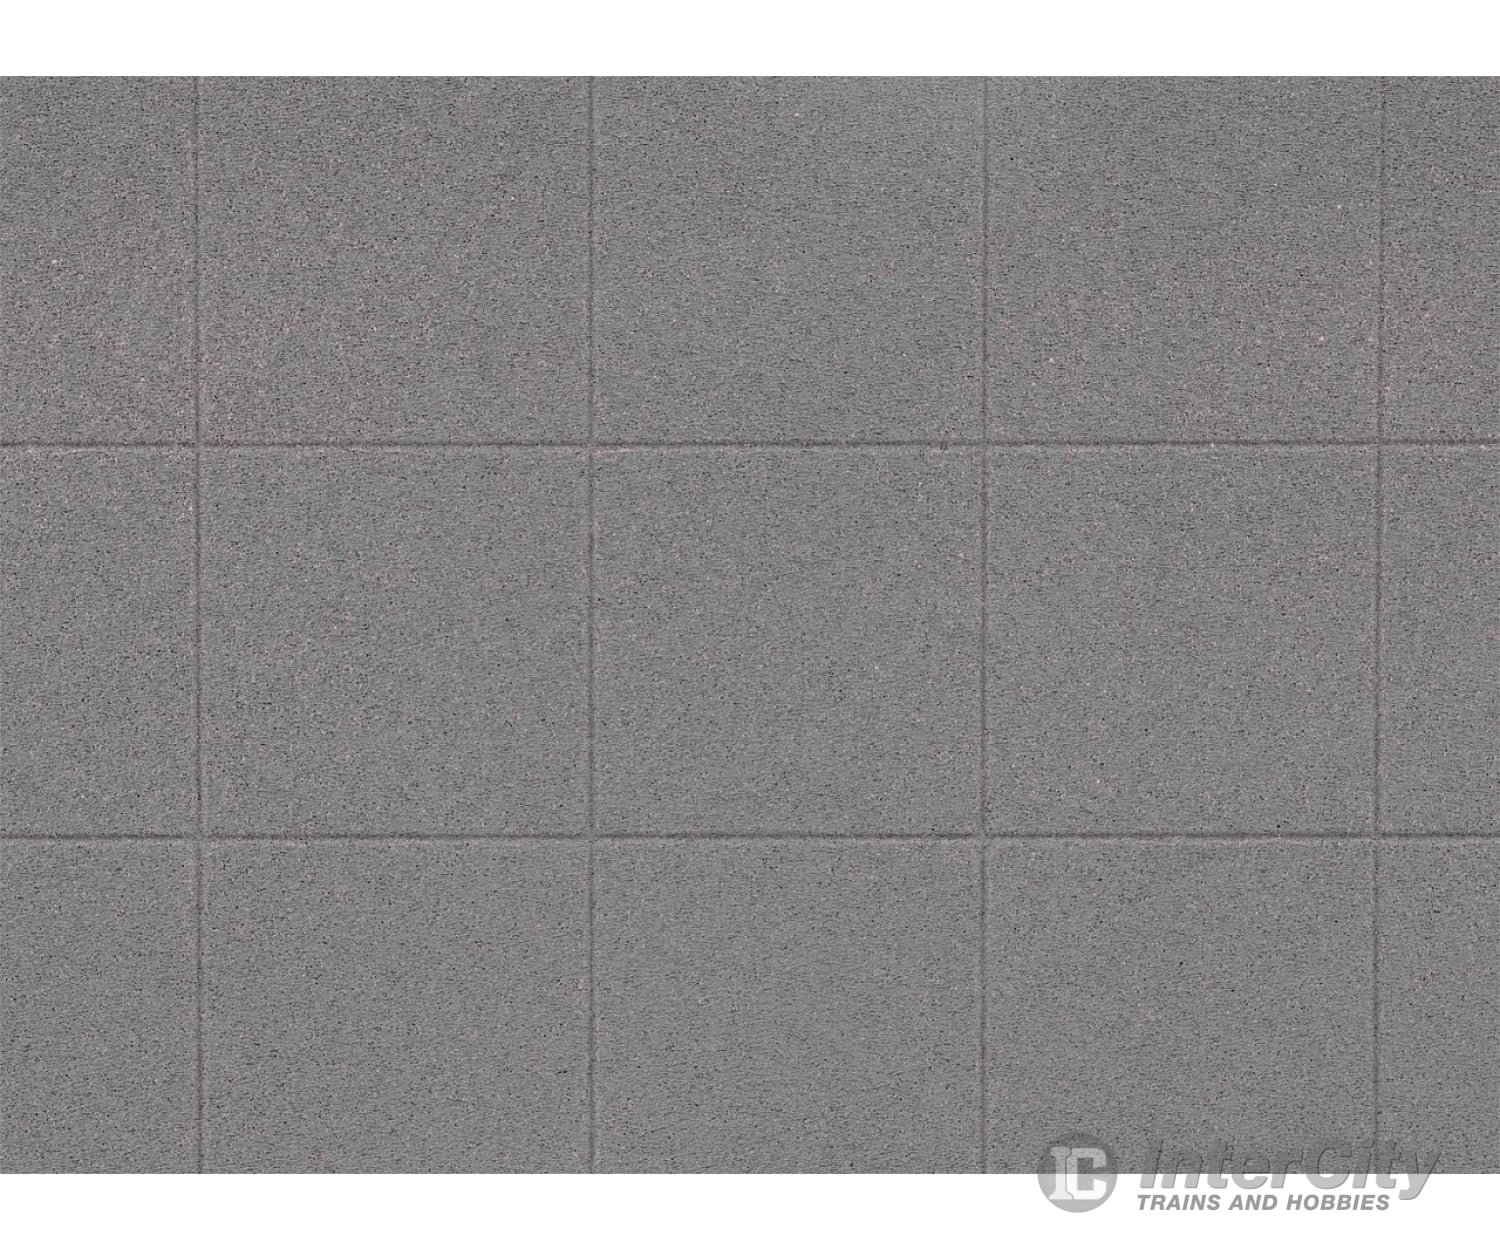 Faller 170808 Ho Decorative Sheet Floor Panels Concrete Roads & Streets